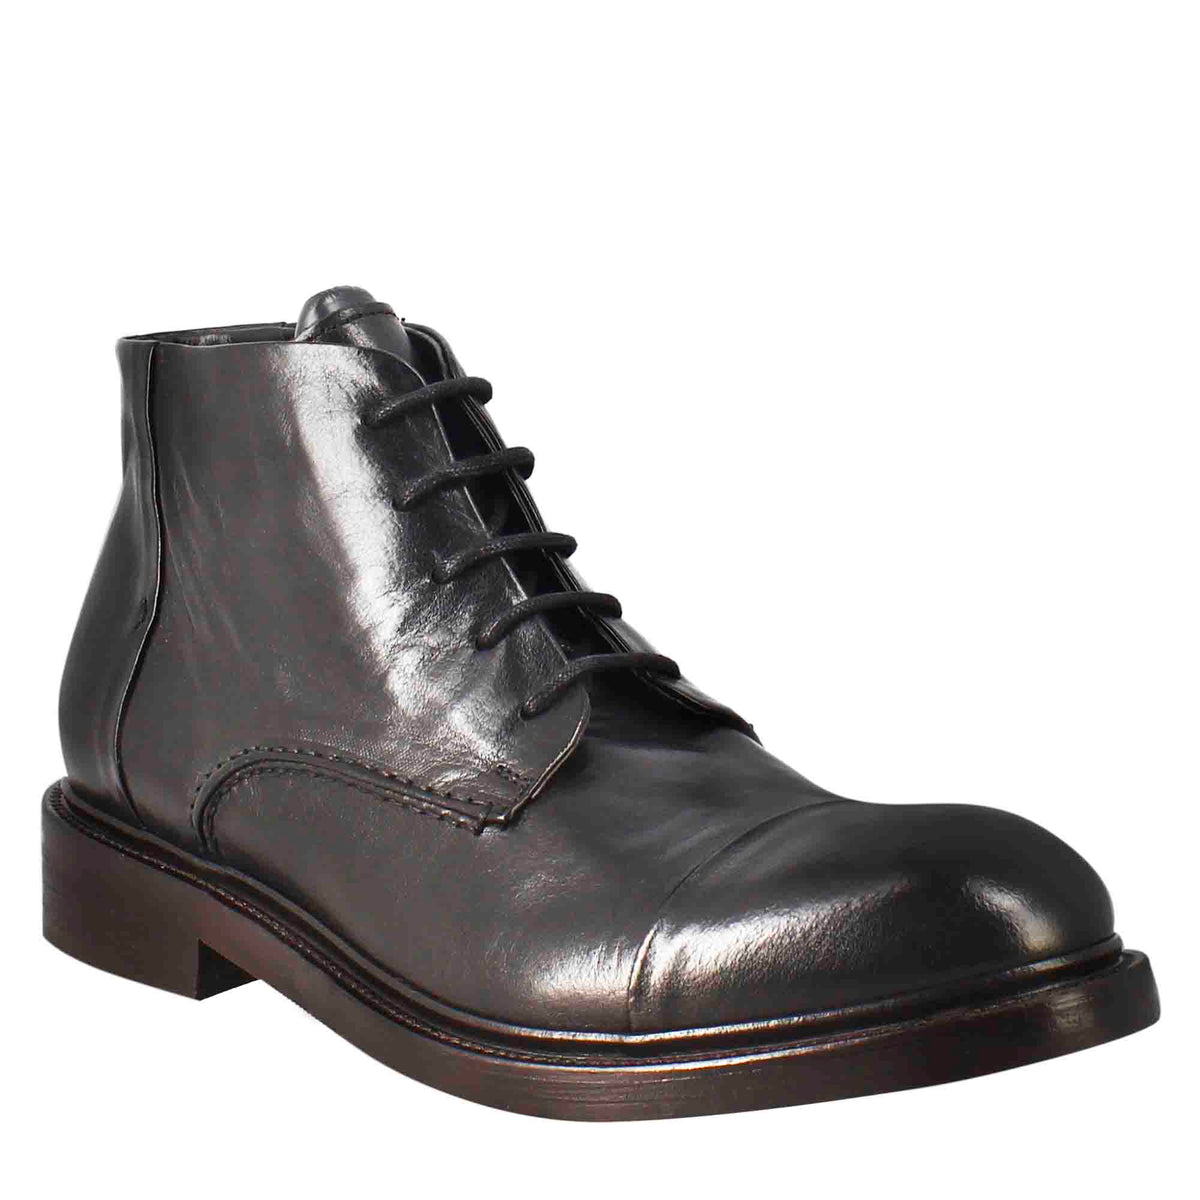 Men Black Zipper Ankle Genuine Leather Boots - Leather Skin Shop